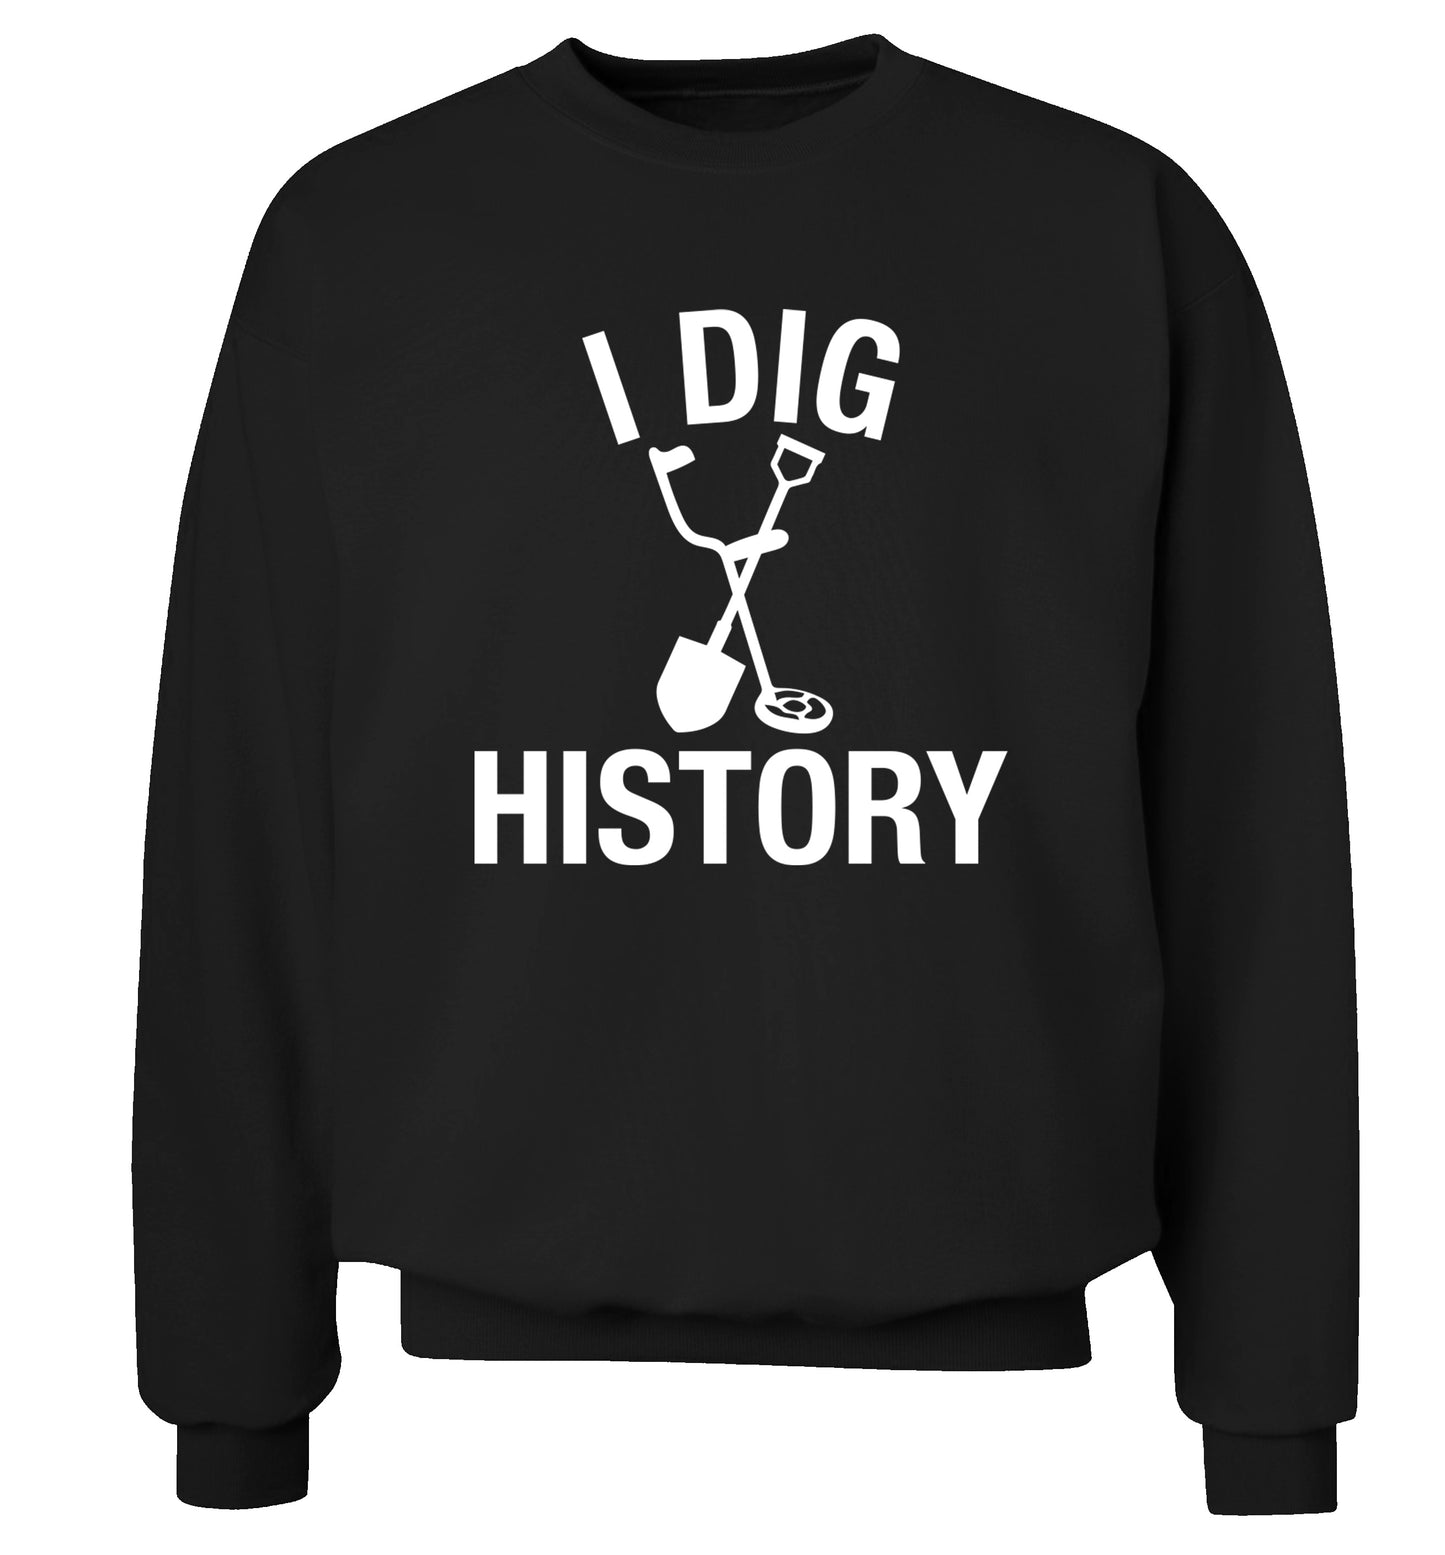 I dig history Adult's unisex black Sweater 2XL